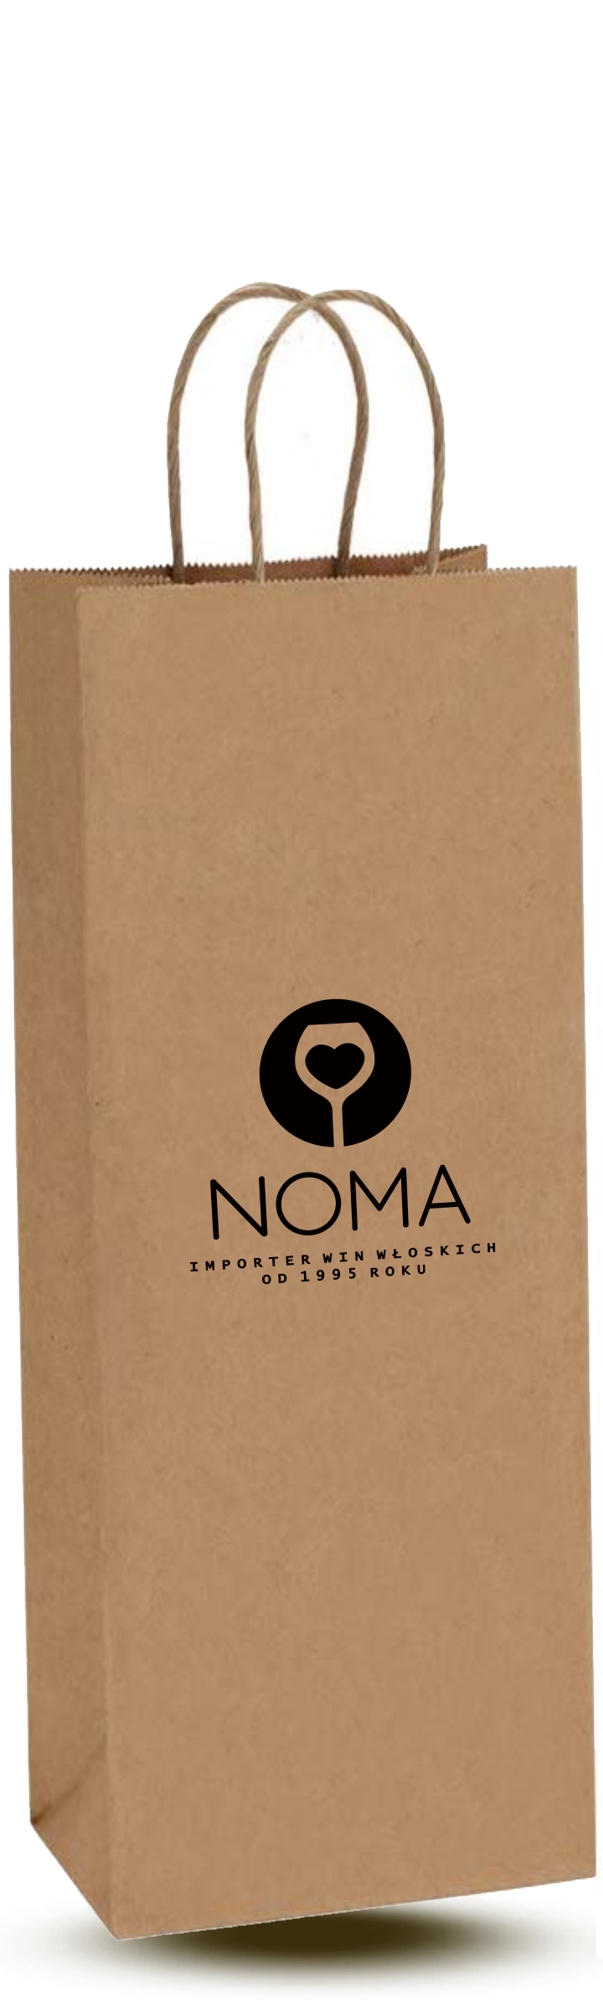 1-2_Torebka eko z logo Noma 1-2 butelki